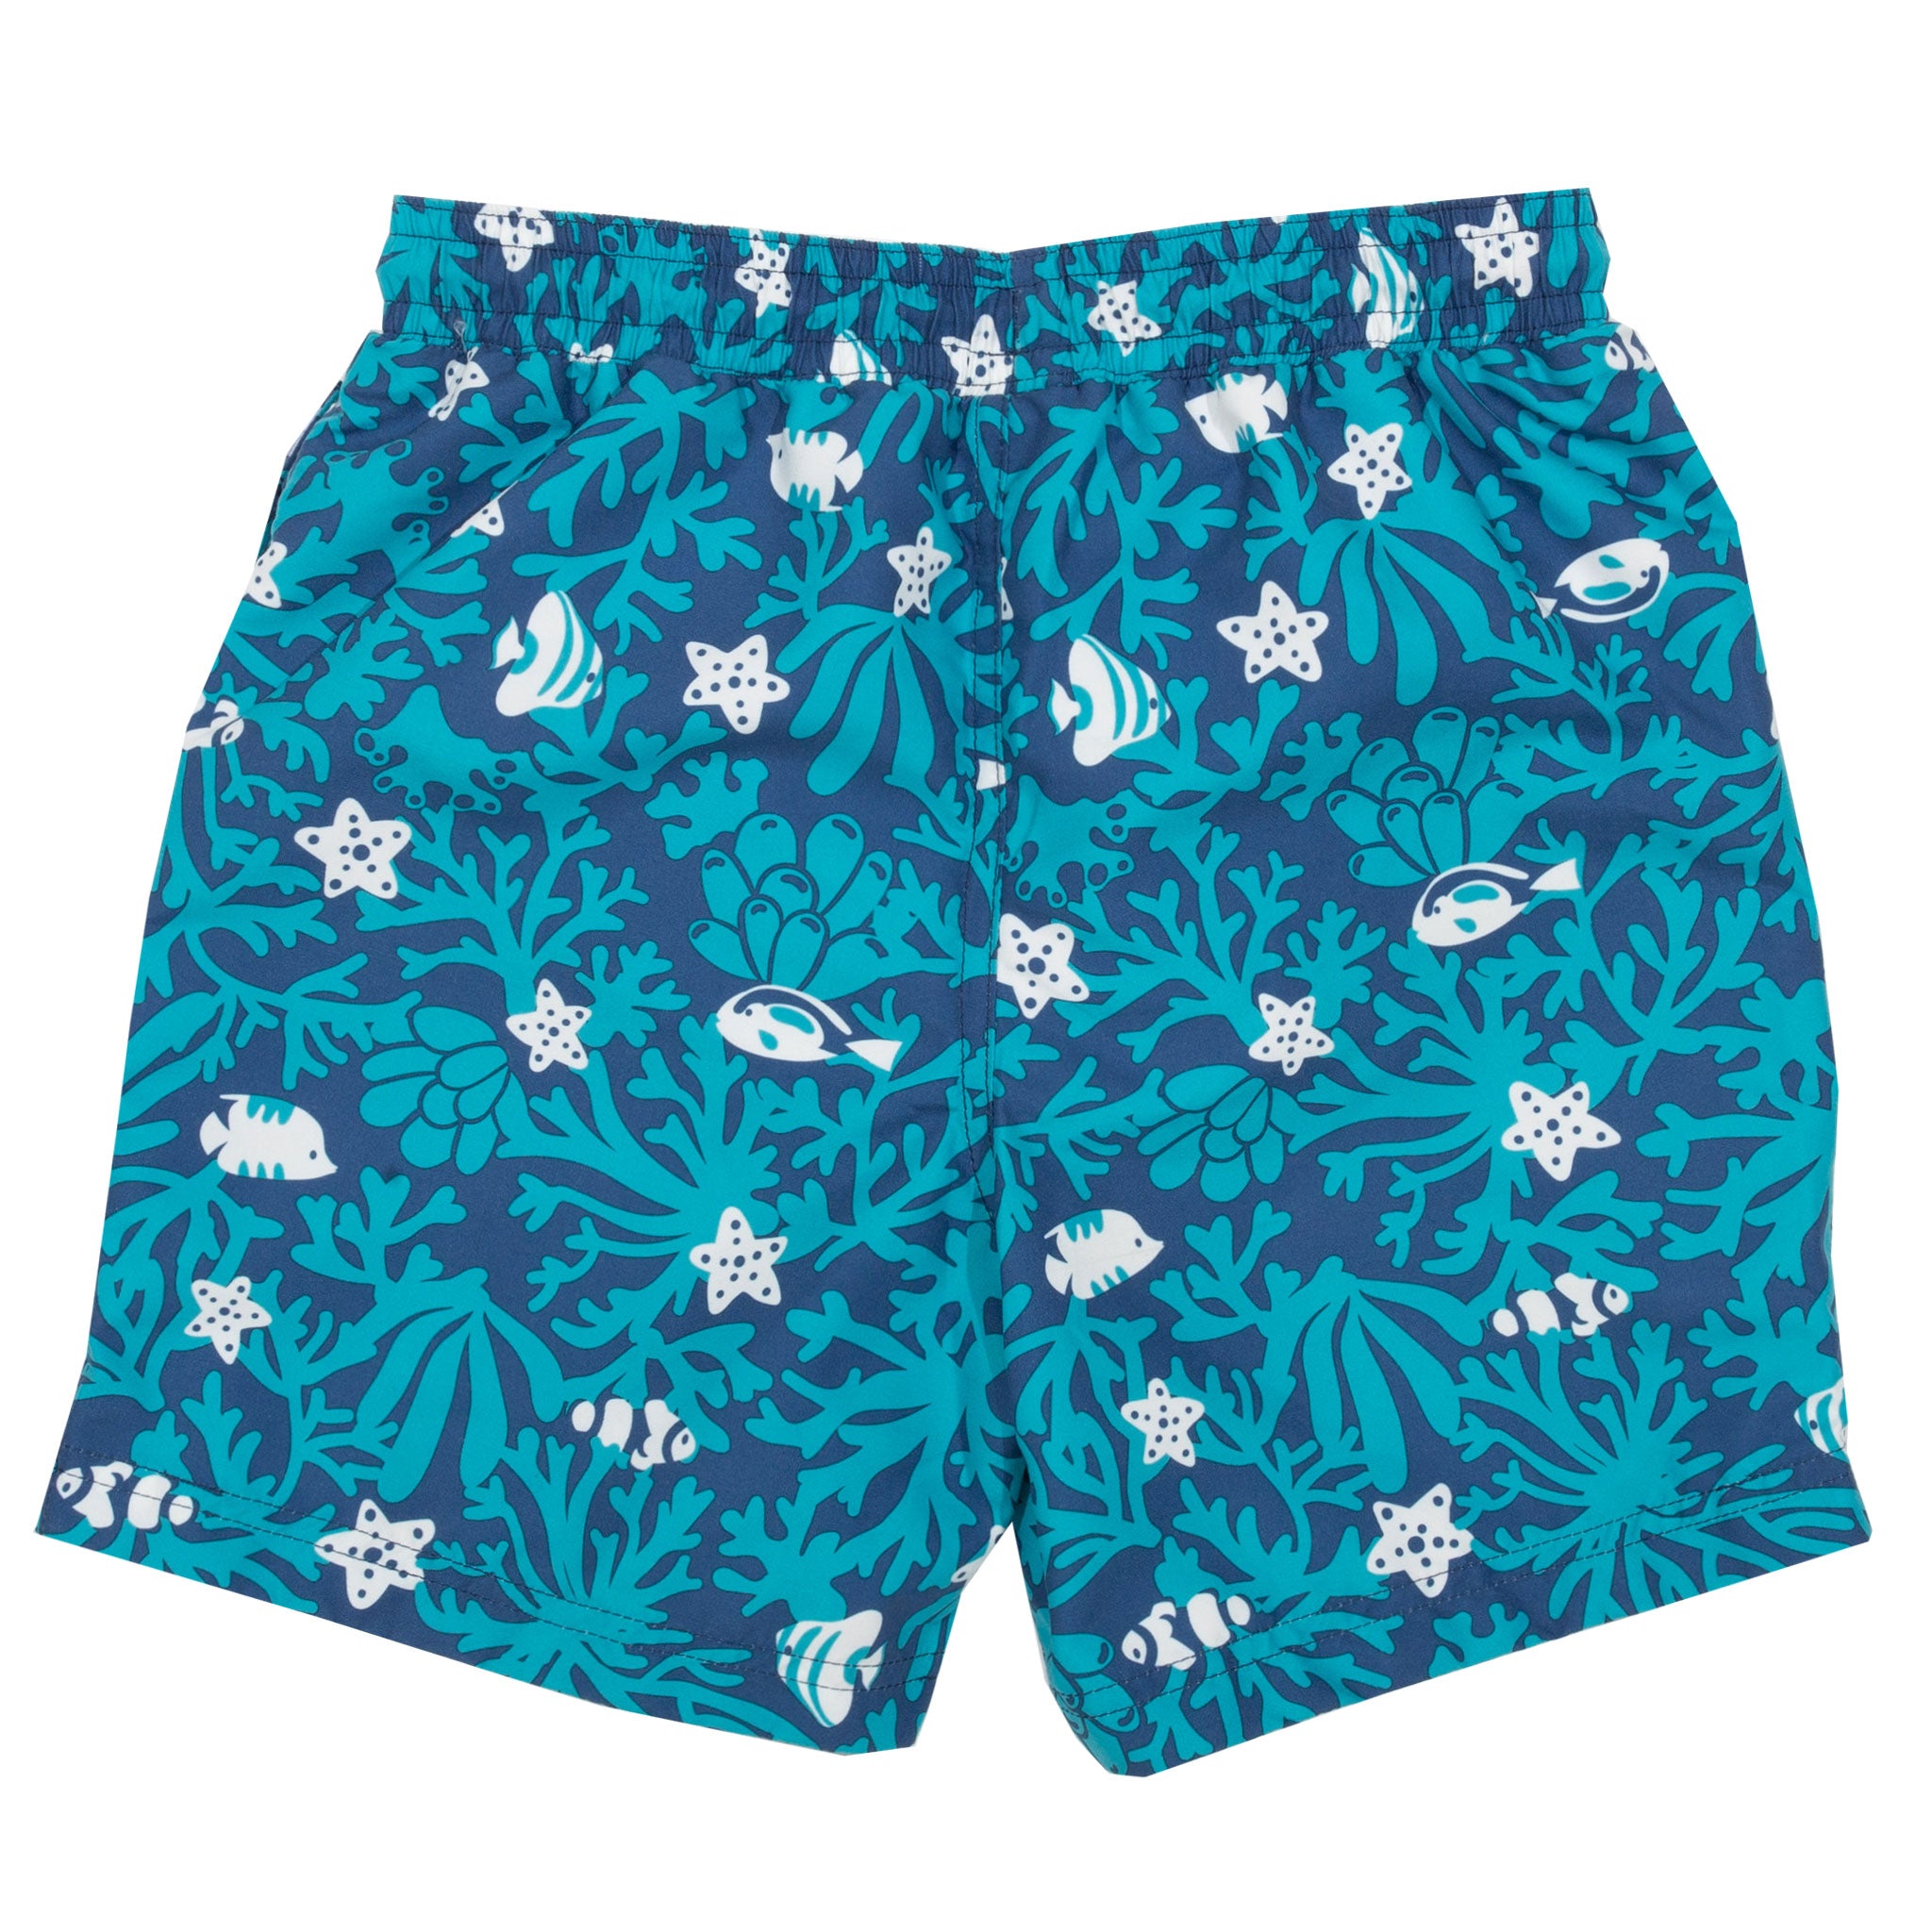 Kite Coral Reef Swim Shorts - Blue